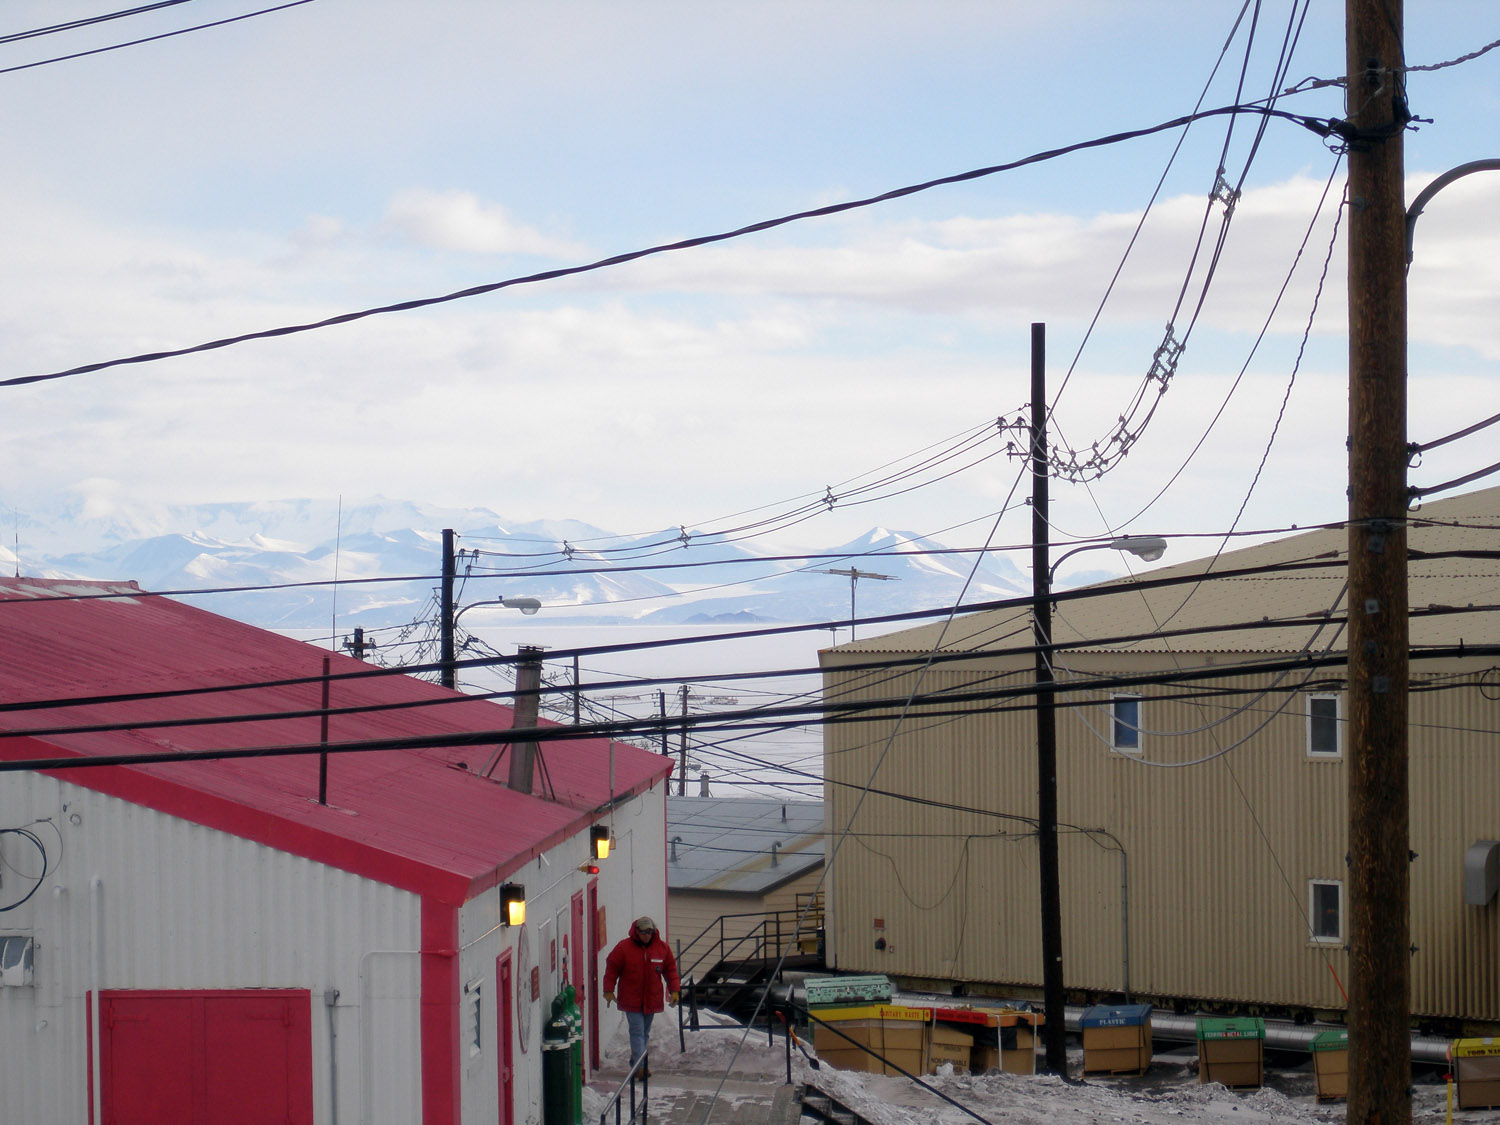 Royal Society Range - from McMurdo Station